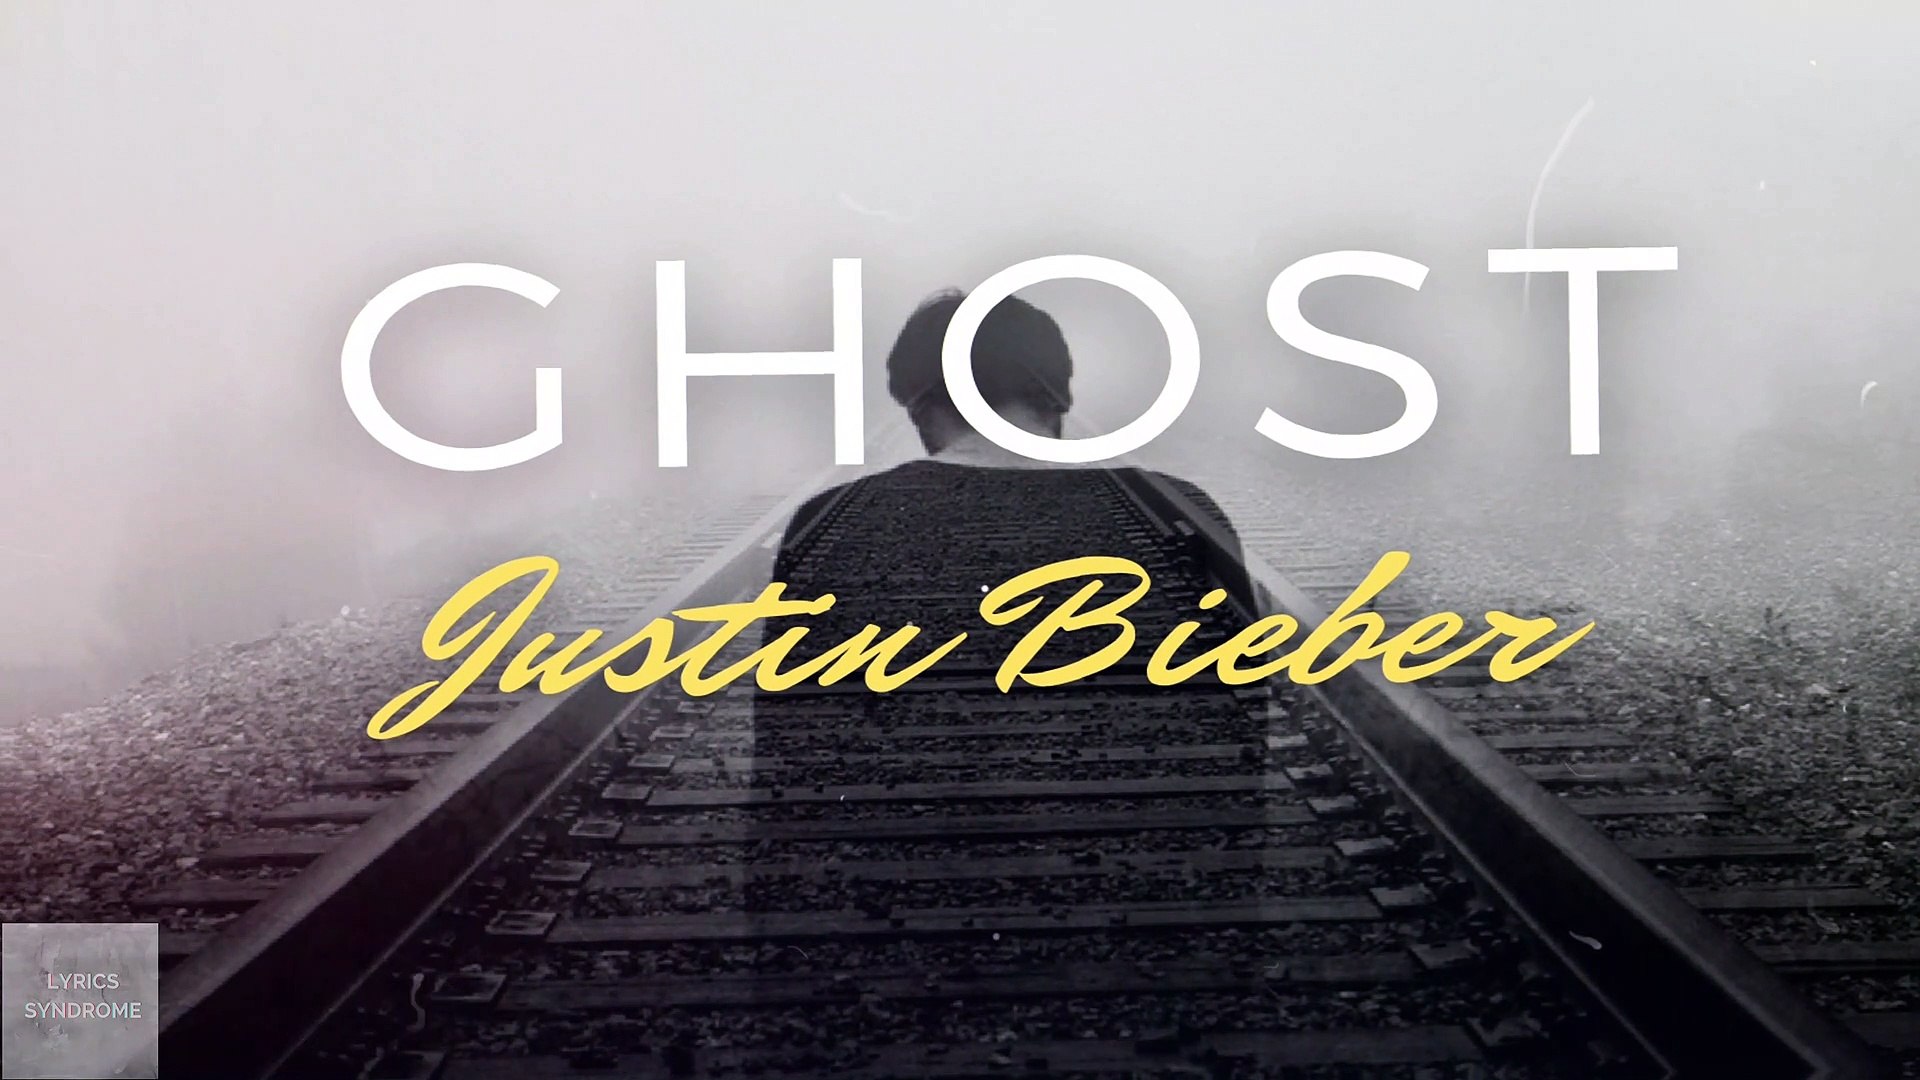 Justin Bieber – Ghost Lyrics